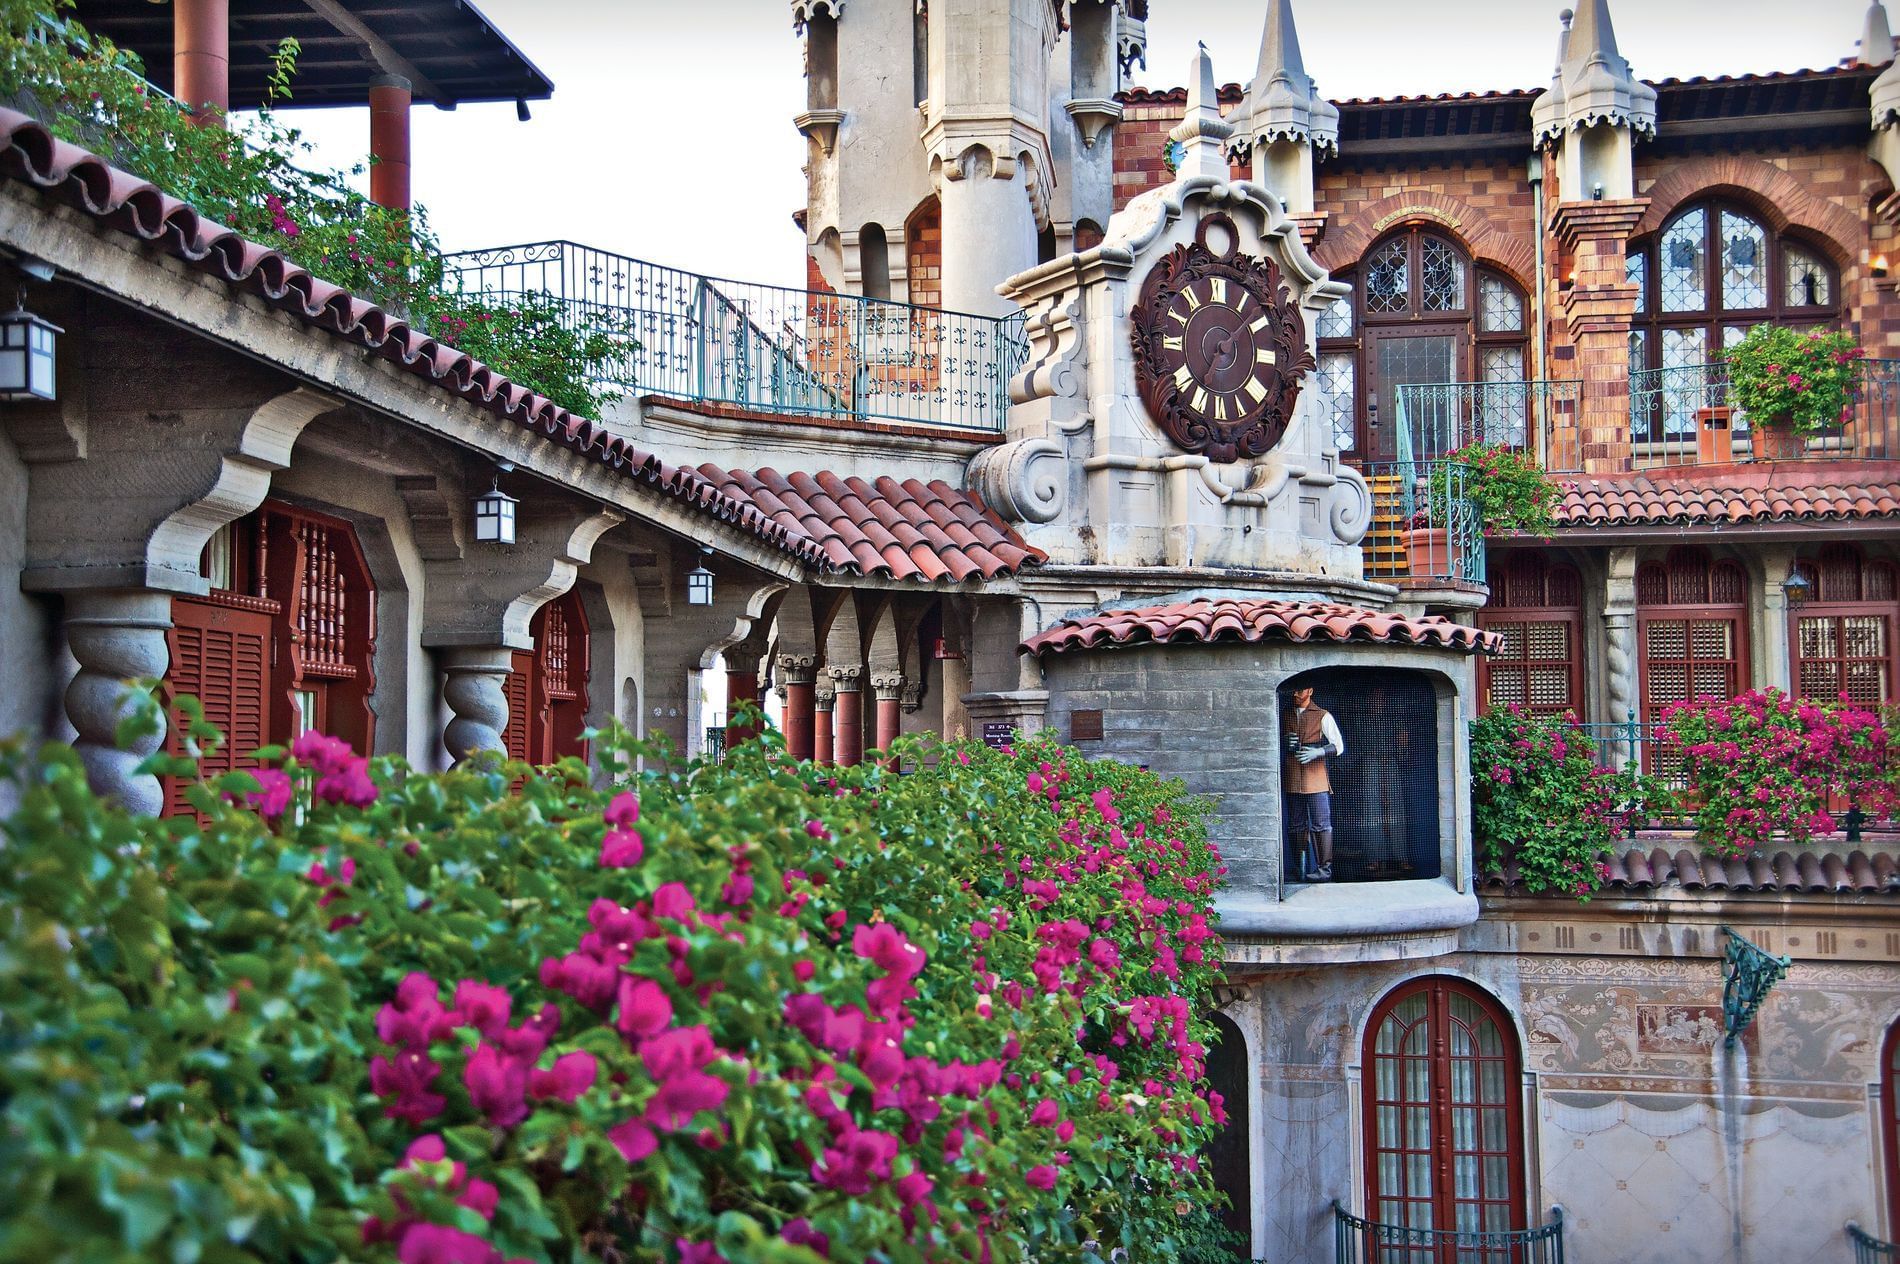 Anton clock & flower balconies at Mission Inn Riverside